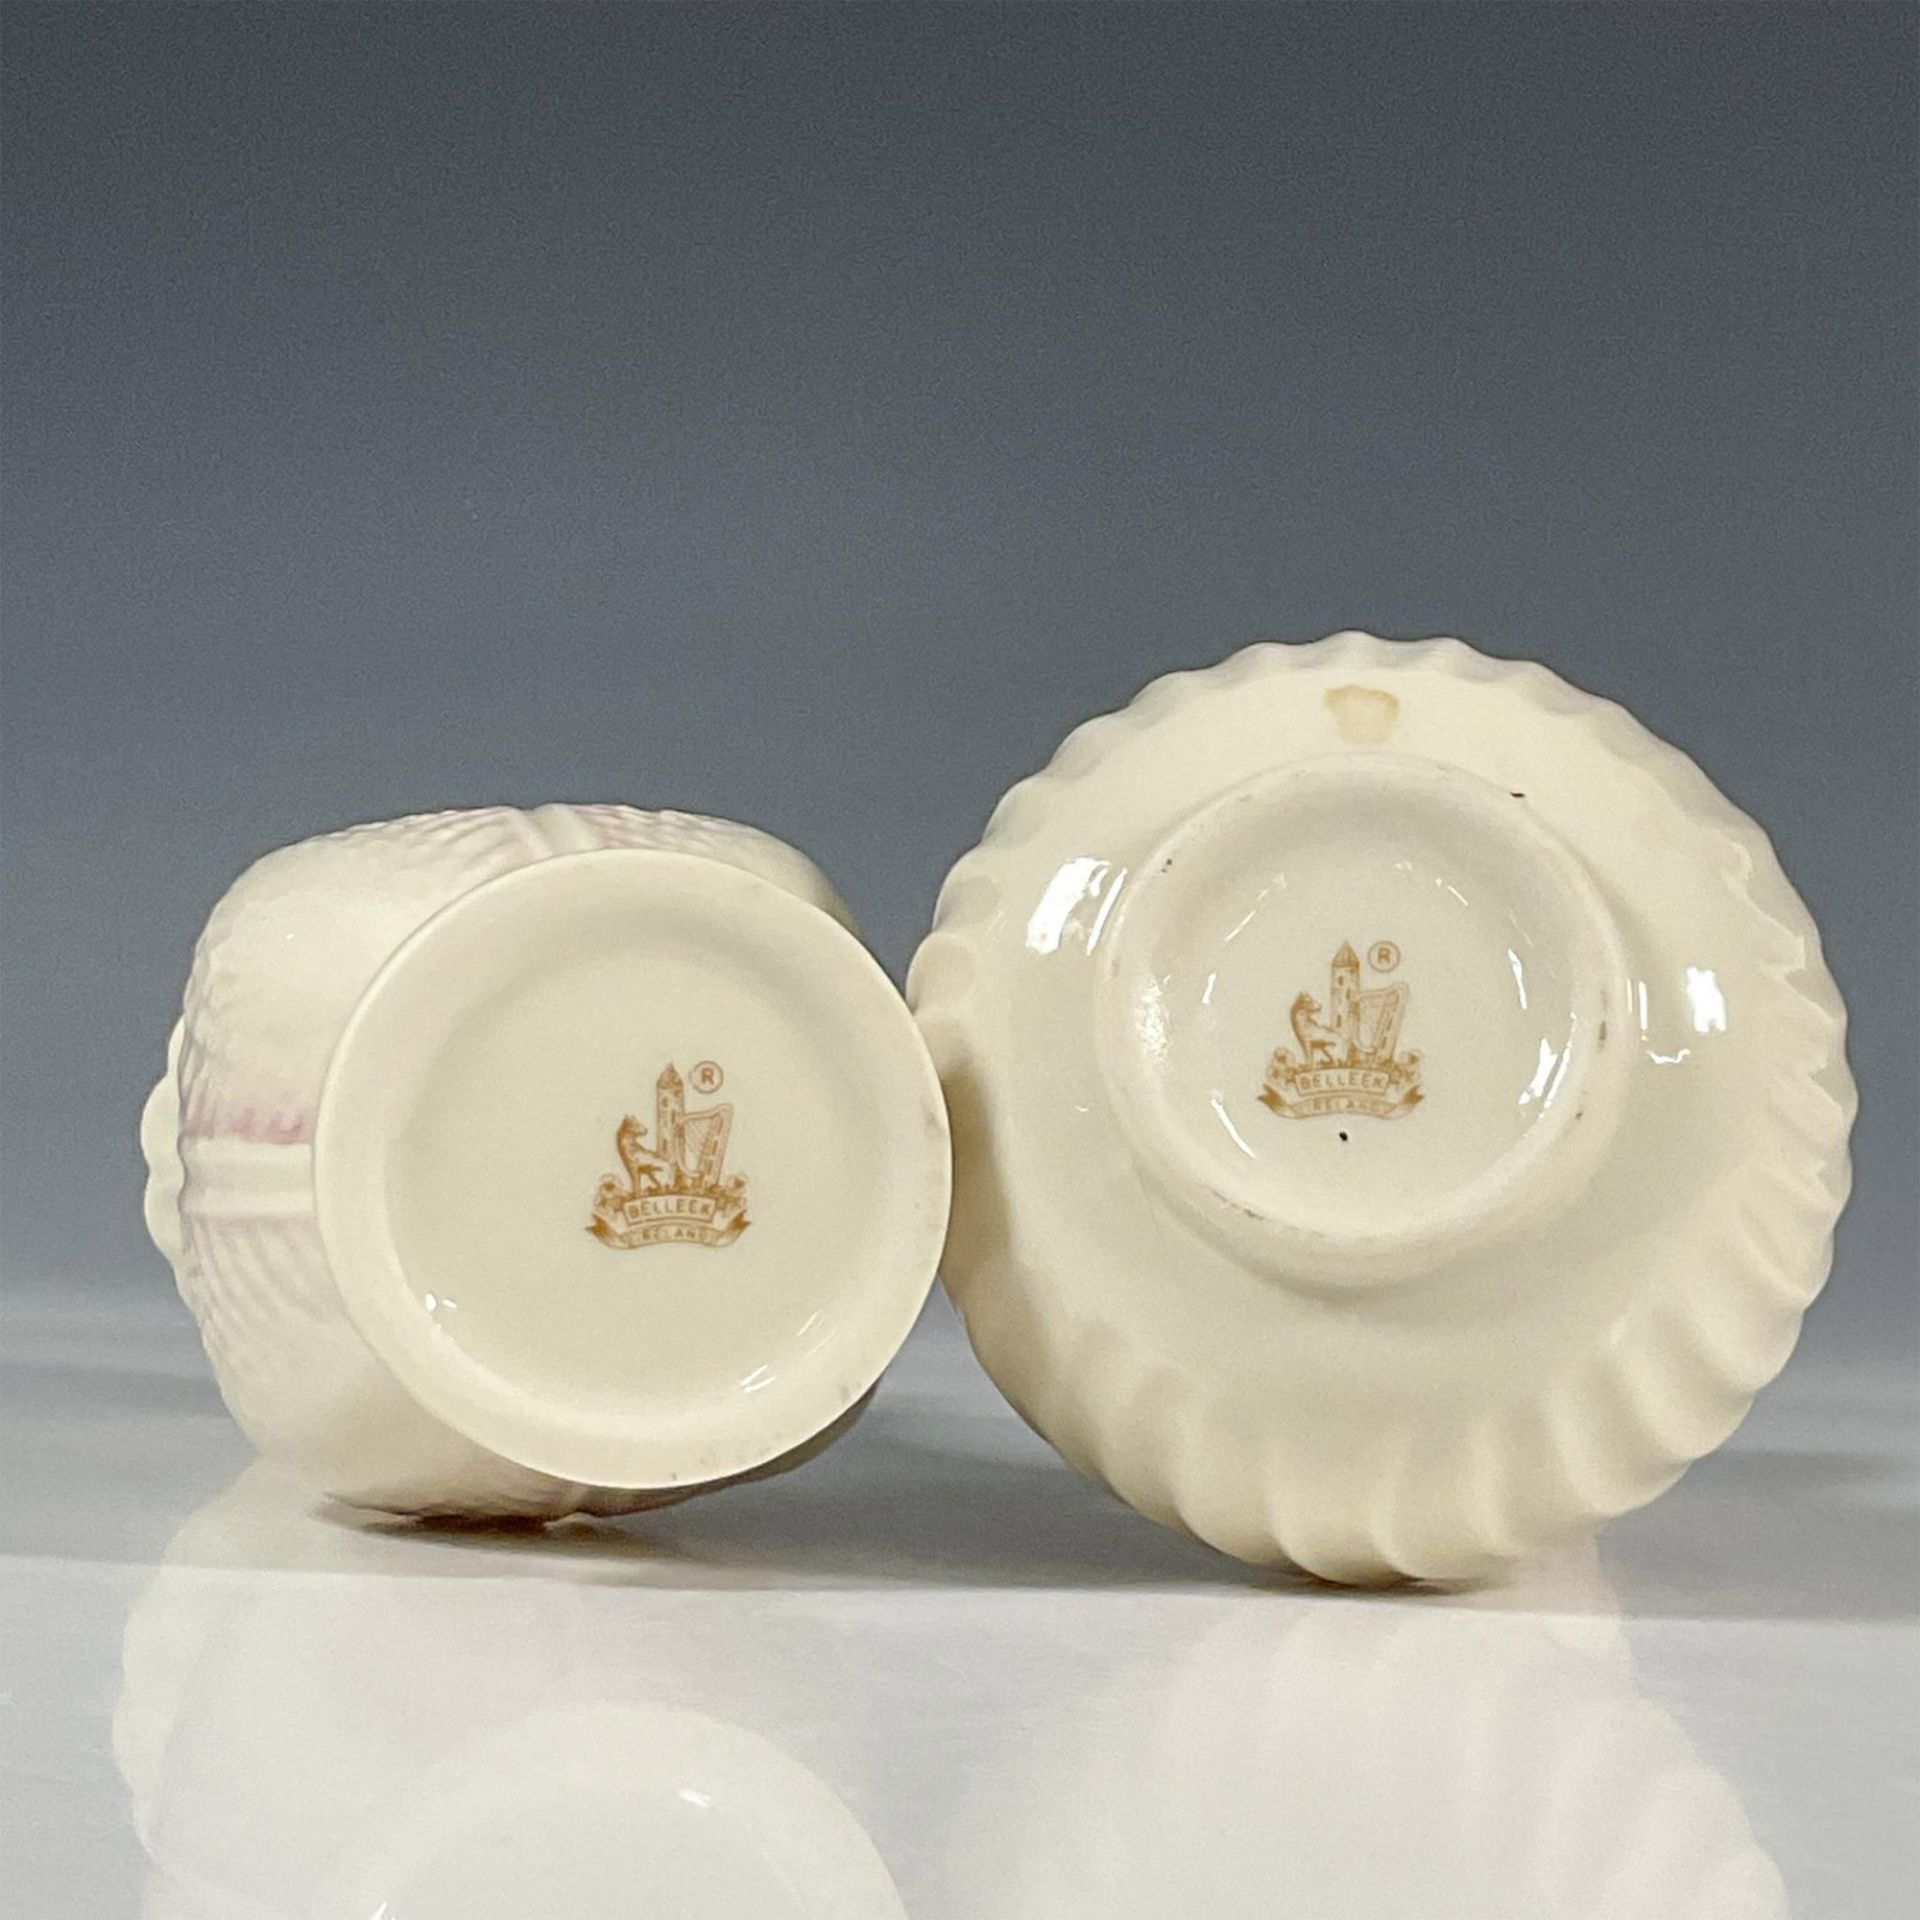 2pc Belleek Pottery Porcelain Vases - Image 4 of 4